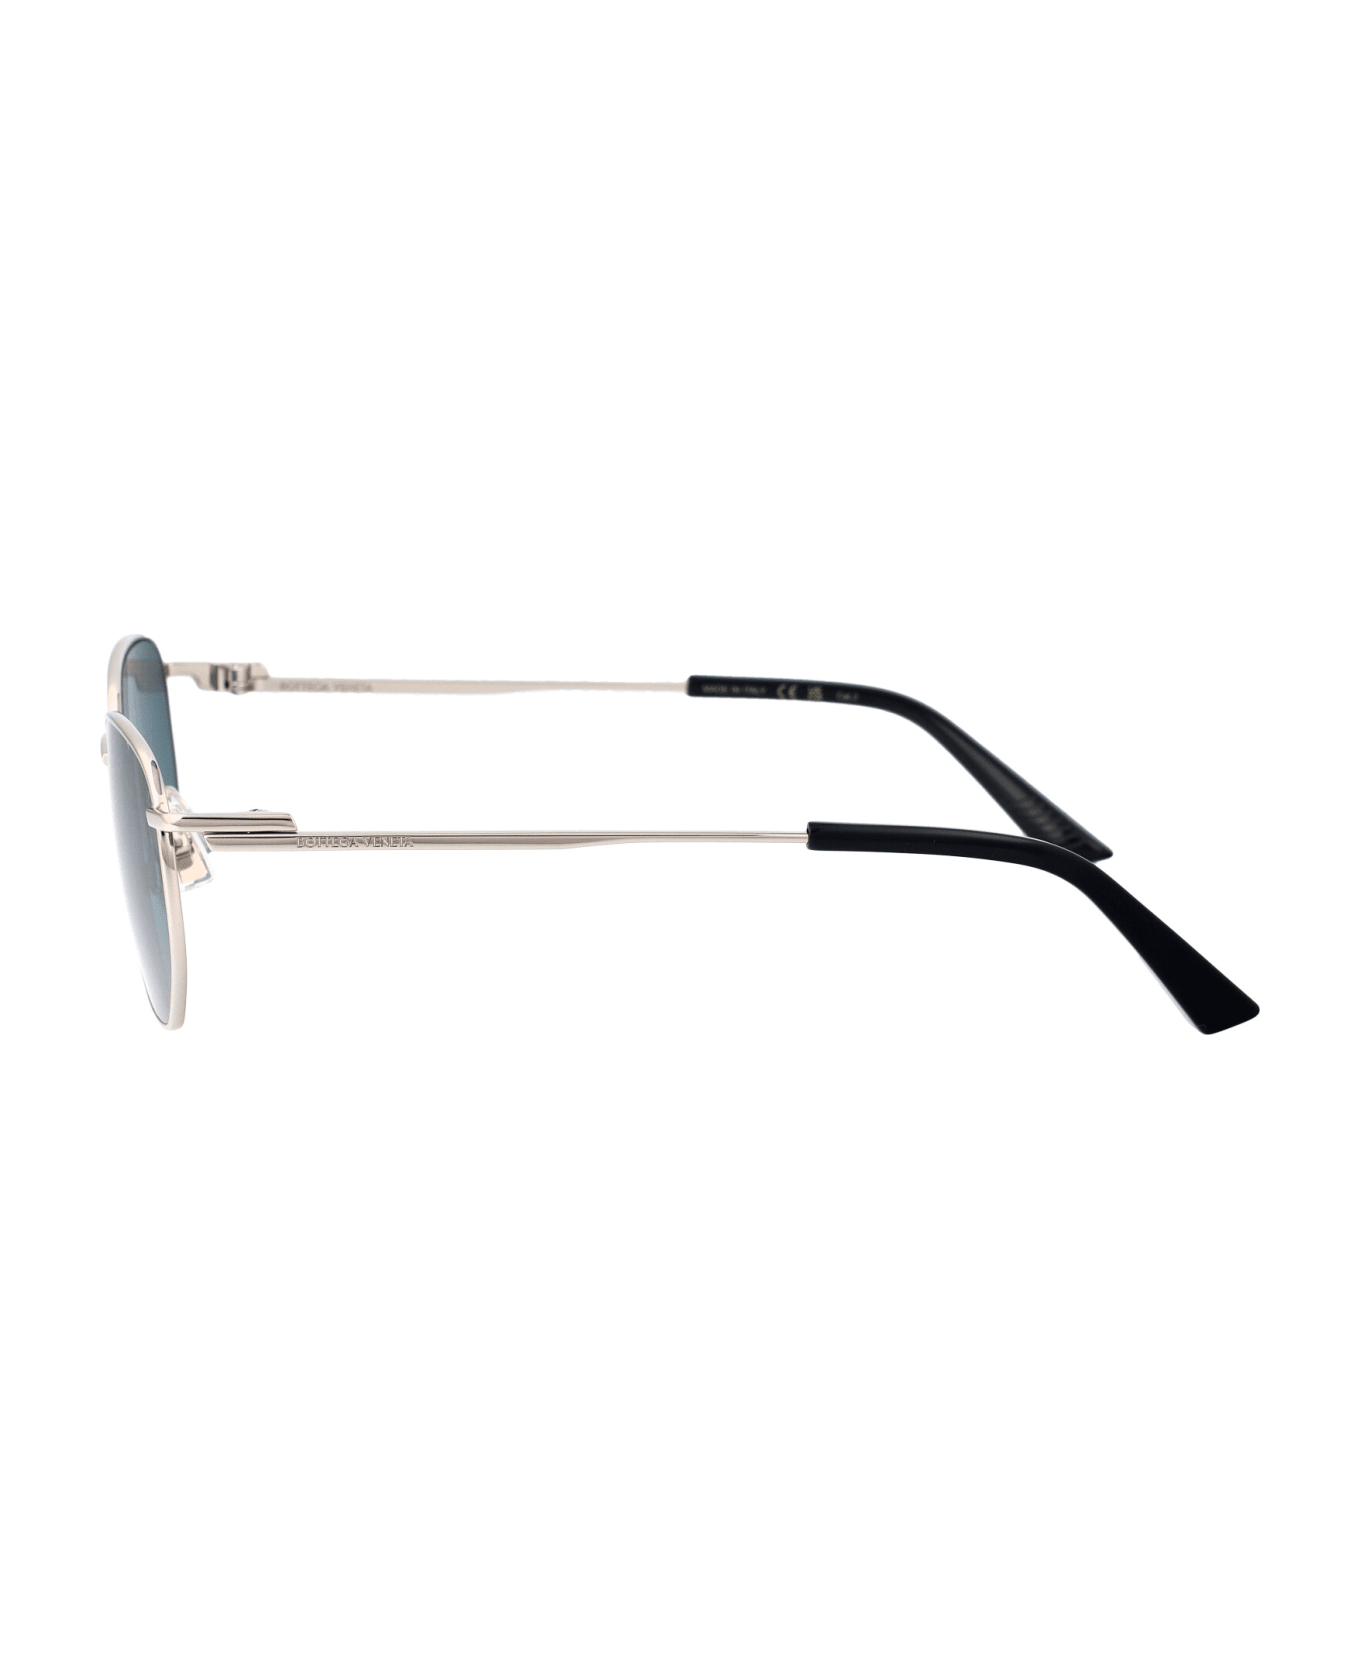 Bottega Veneta Eyewear Bv1301s Sunglasses - 004 SILVER SILVER GREEN サングラス